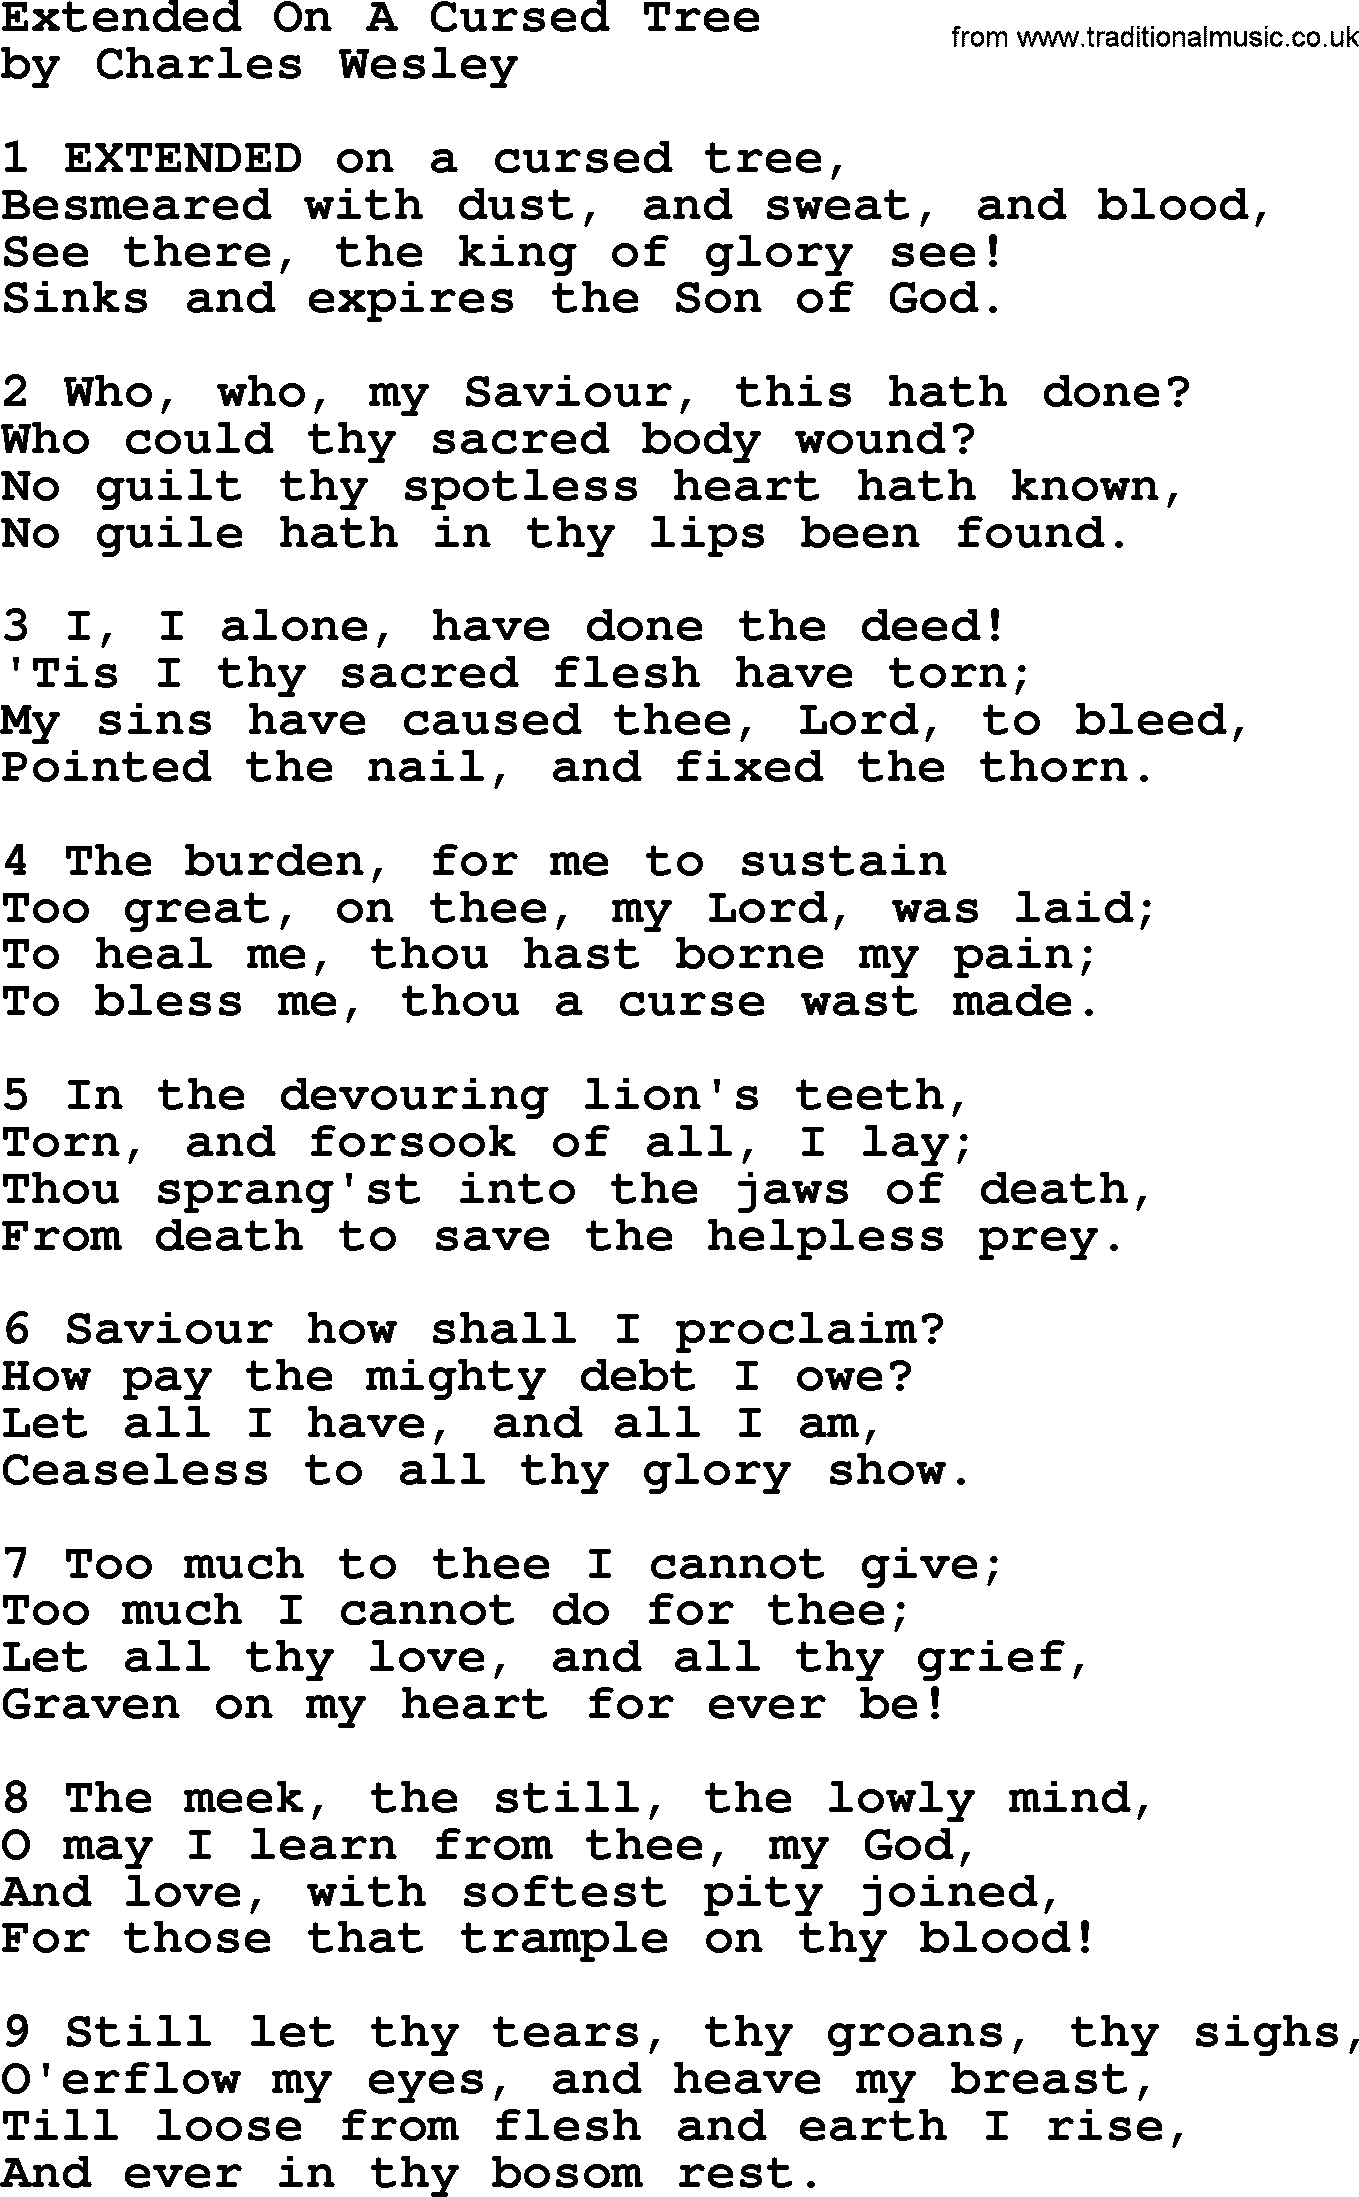 Charles Wesley hymn: Extended On A Cursed Tree, lyrics